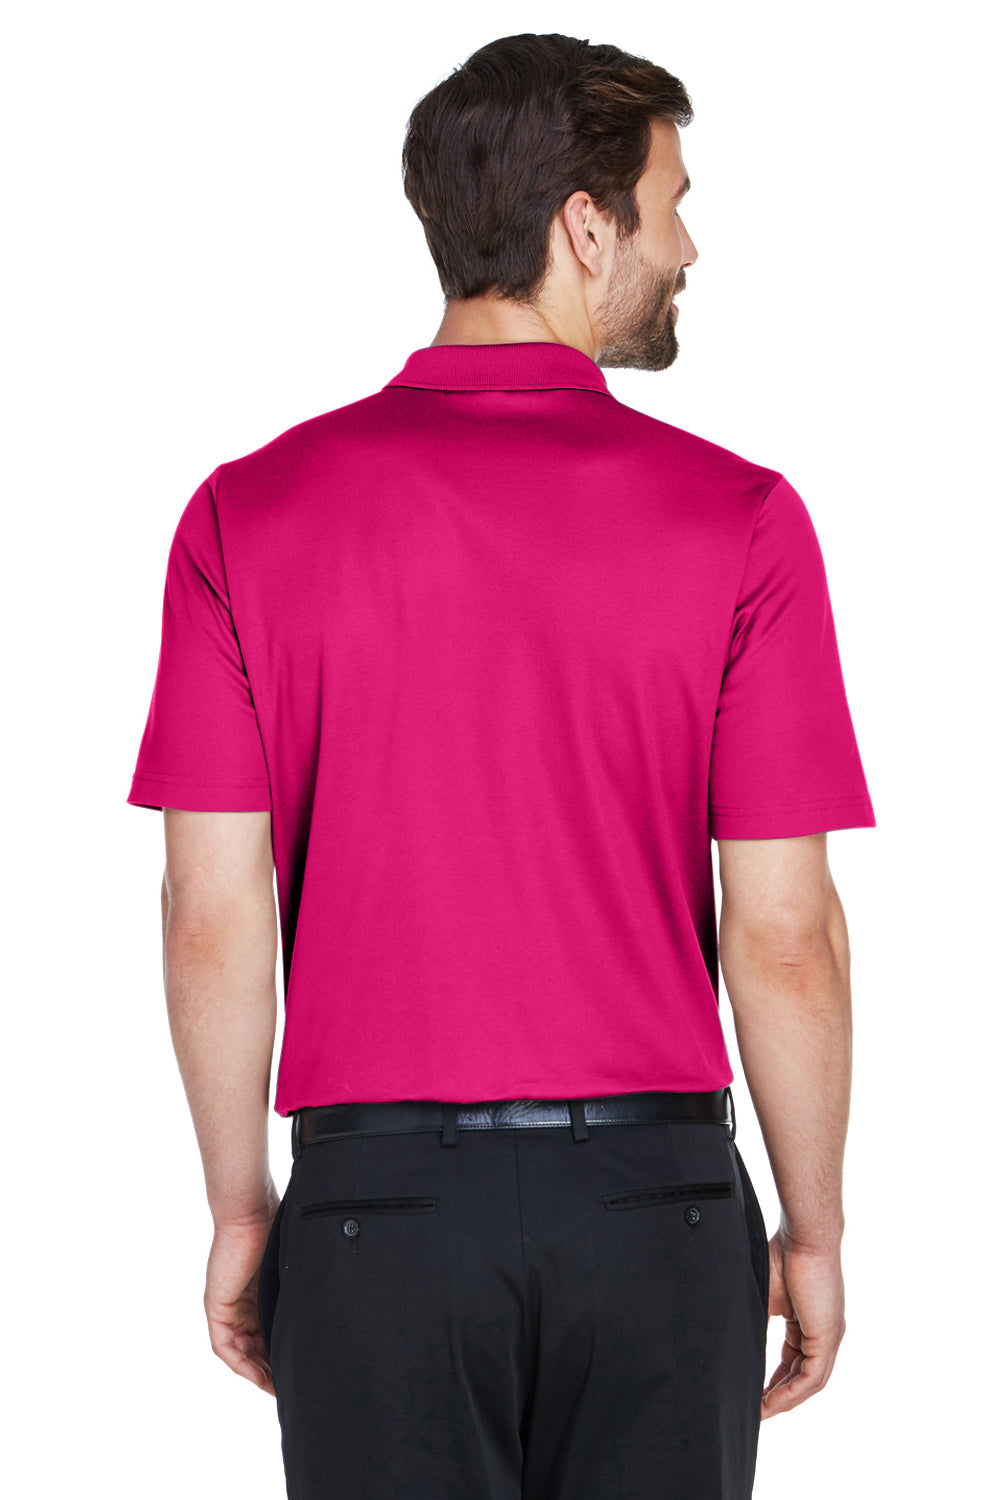 Devon & Jones DG20 CrownLux Performance Moisture Wicking Short Sleeve Polo Shirt Raspberry Pink Back